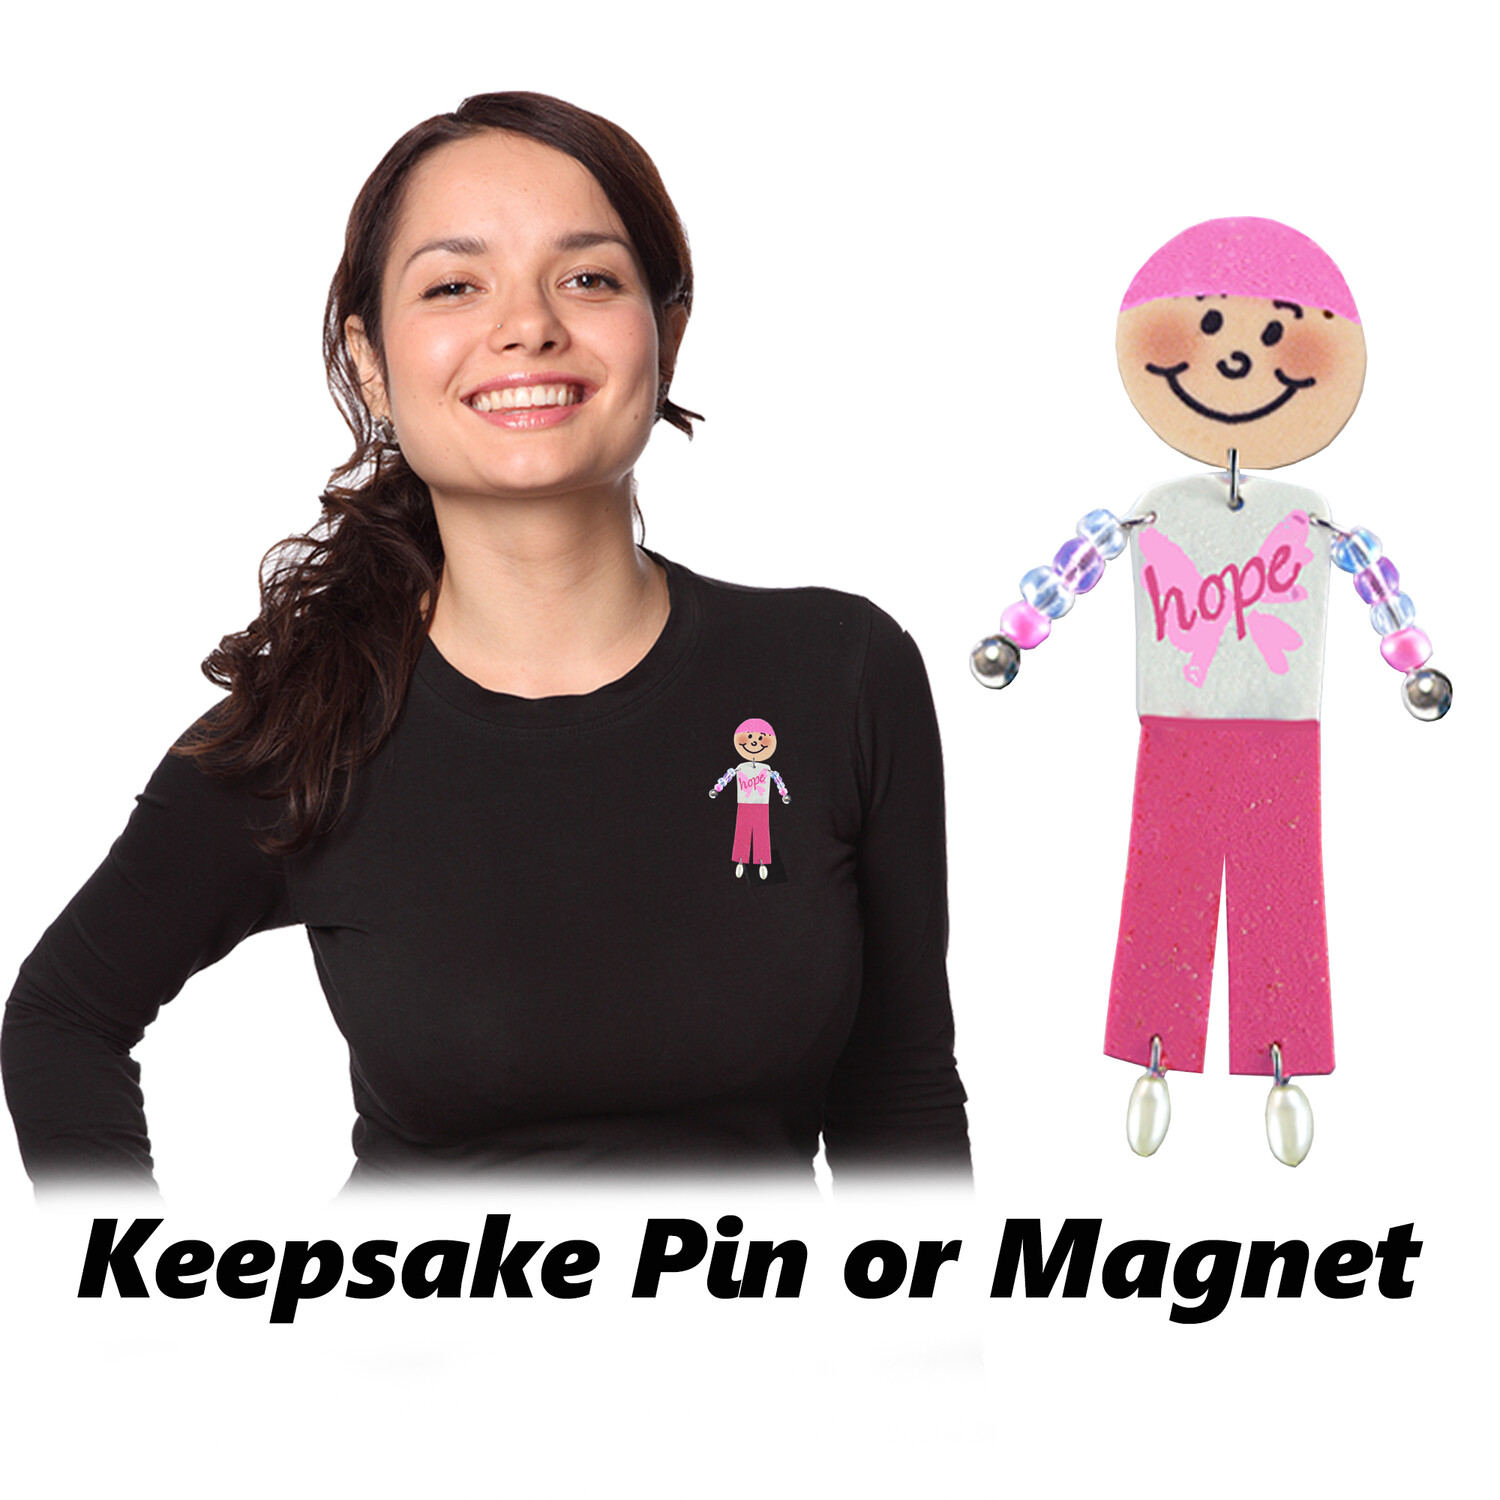 Cancer Awareness - Pin or Magnet